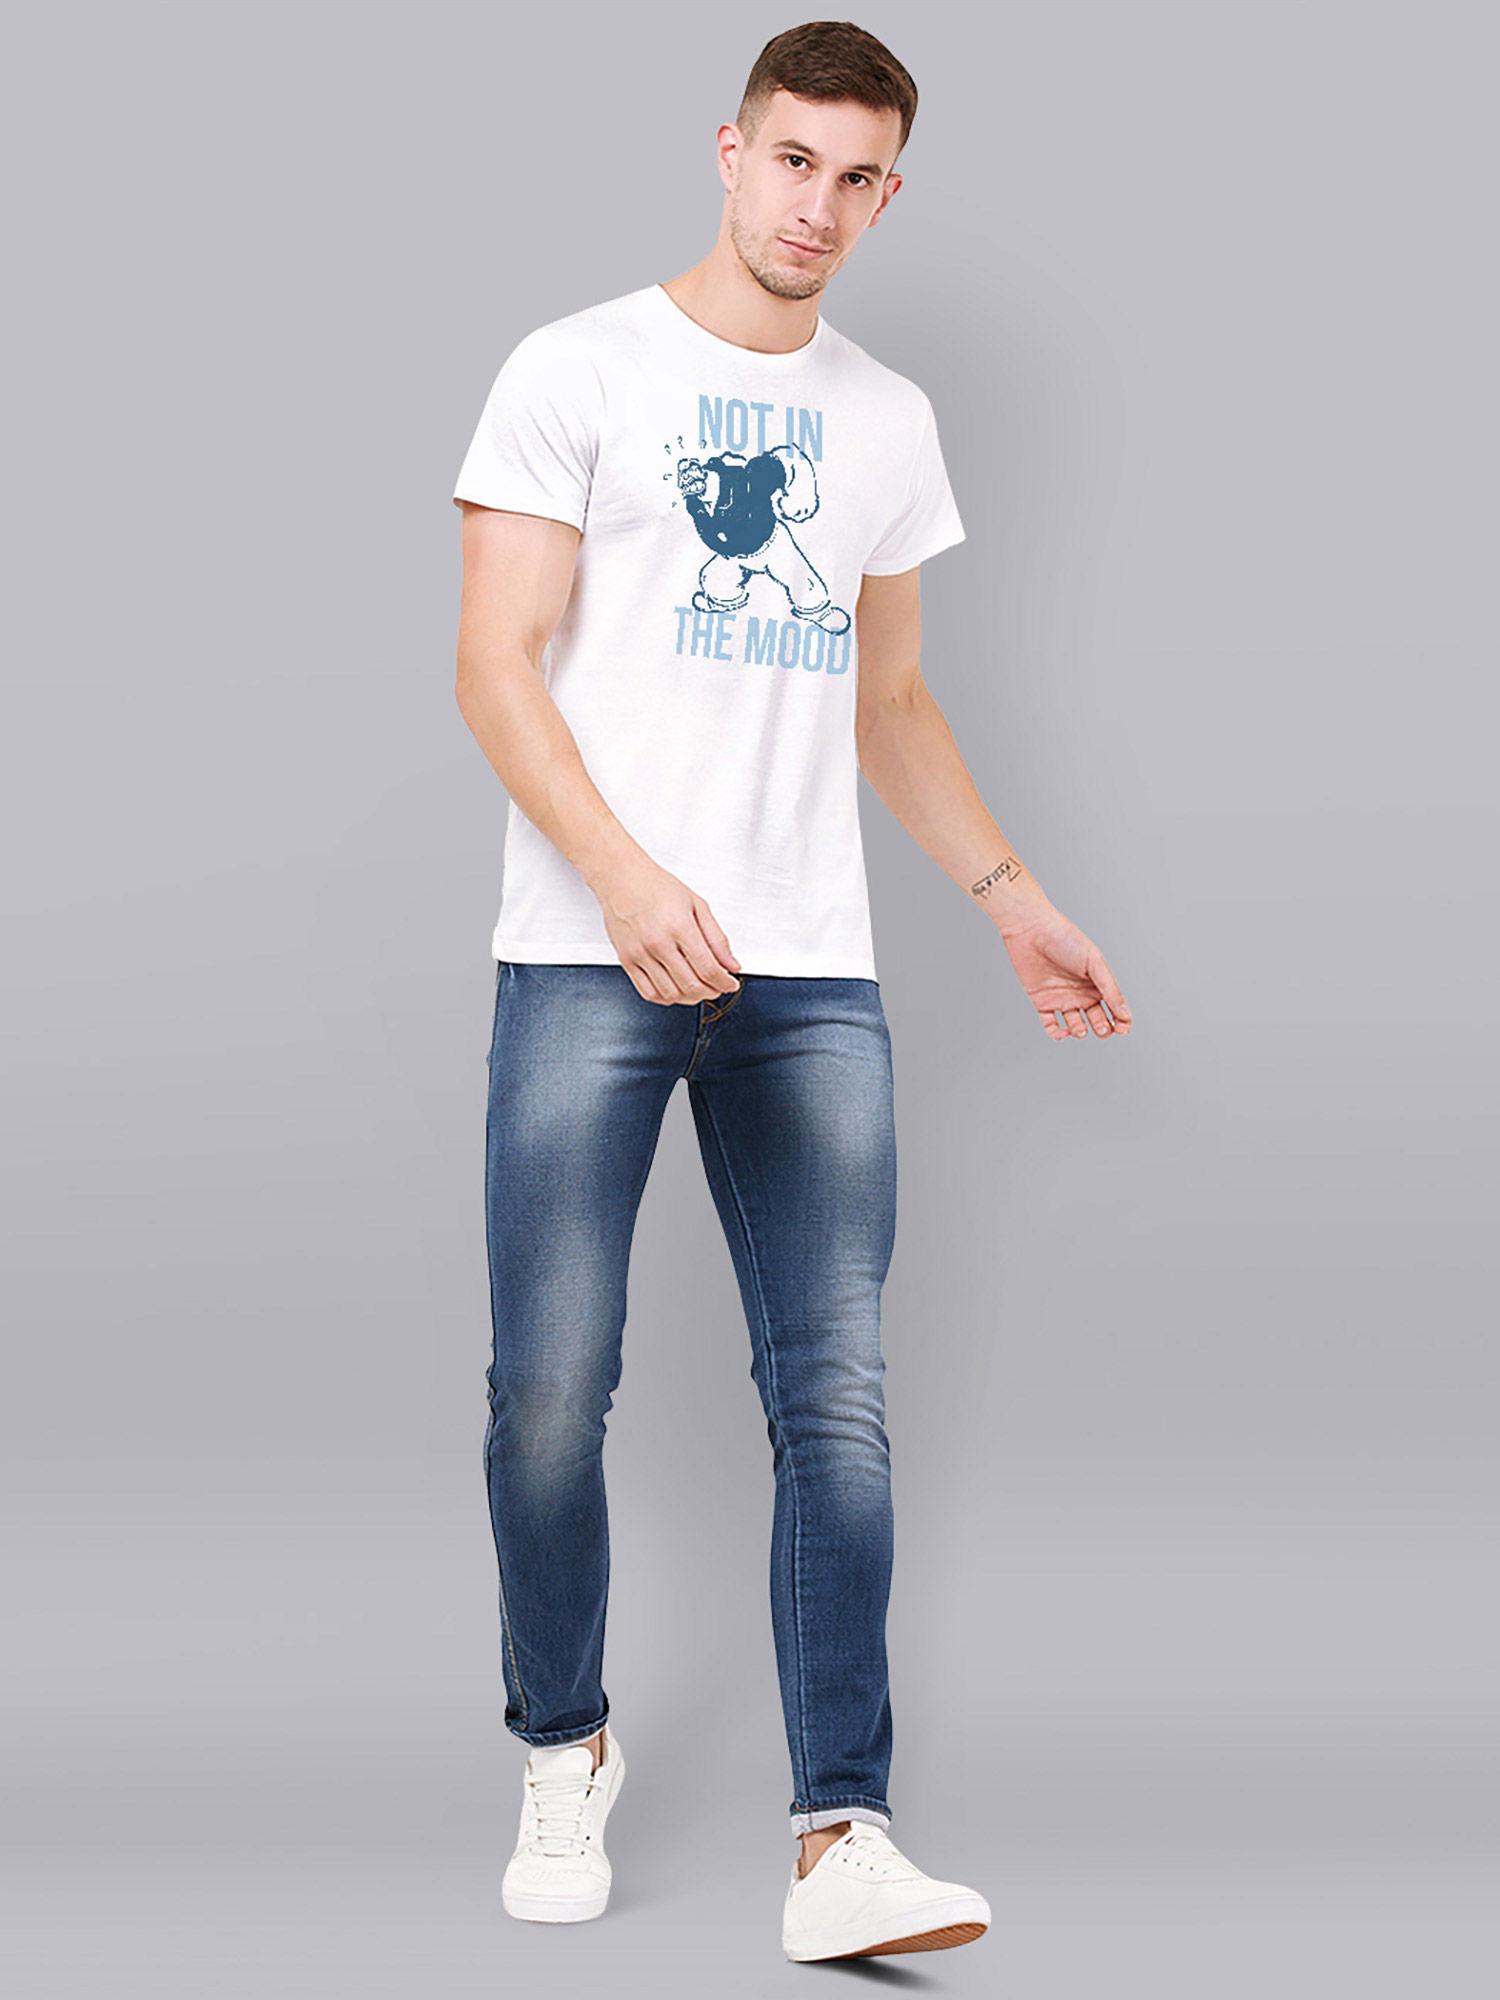 popeye featured white tshirt for men